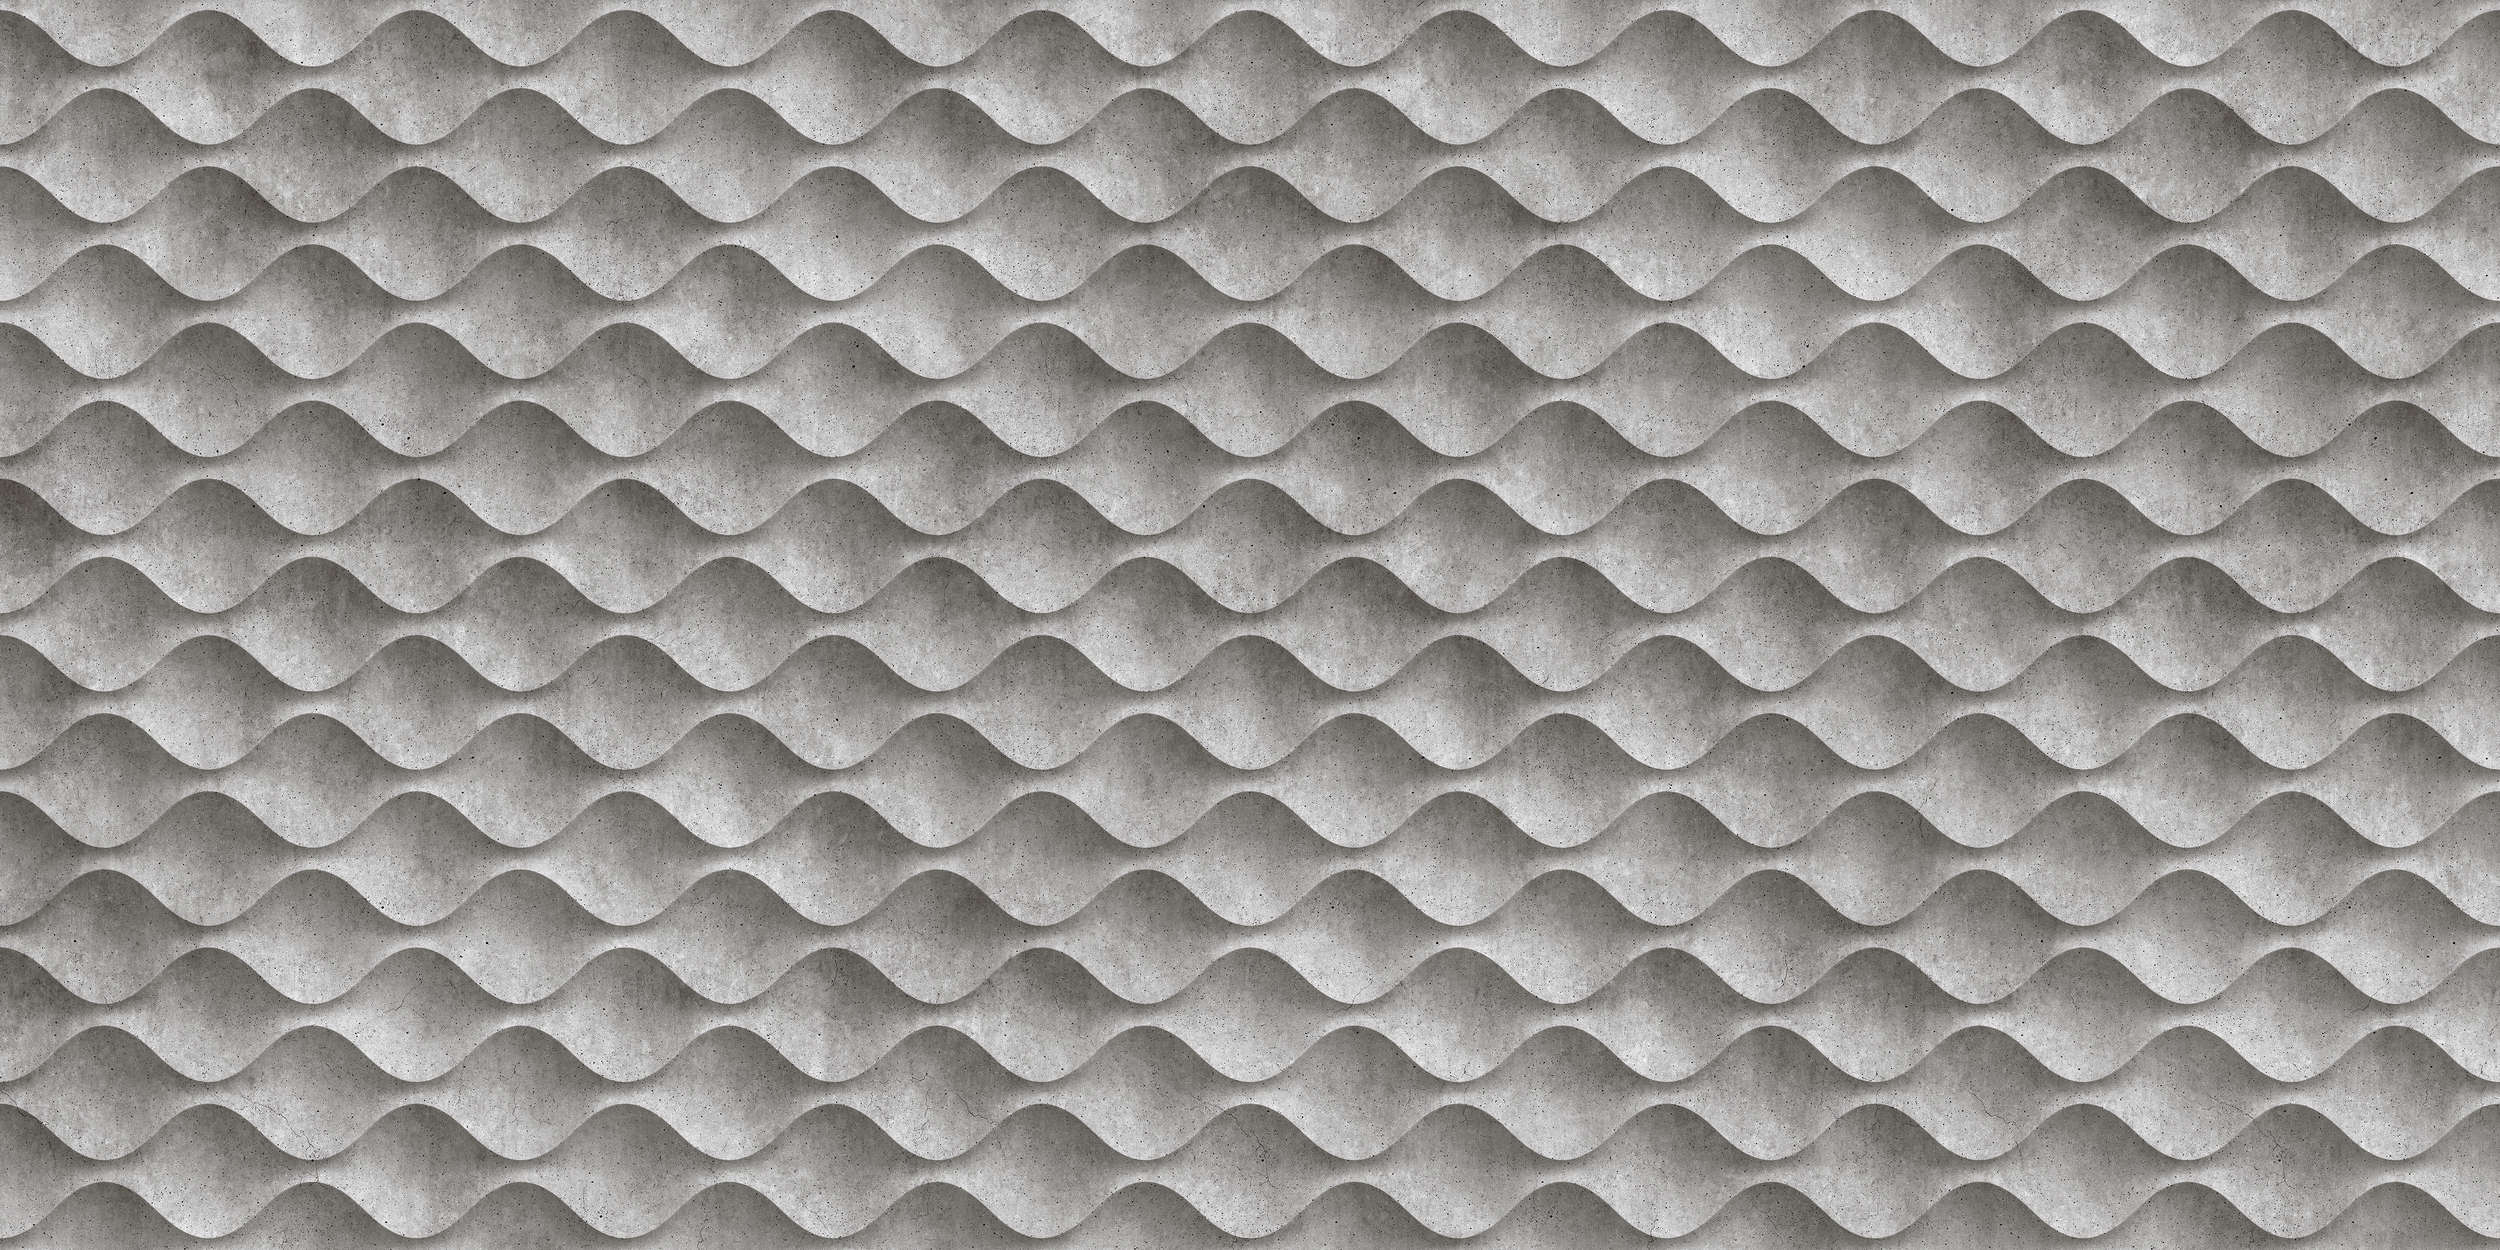             Concrete 1 - Coole 3D Beton-Wellen Fototapete – Grau, Schwarz | Premium Glattvlies
        